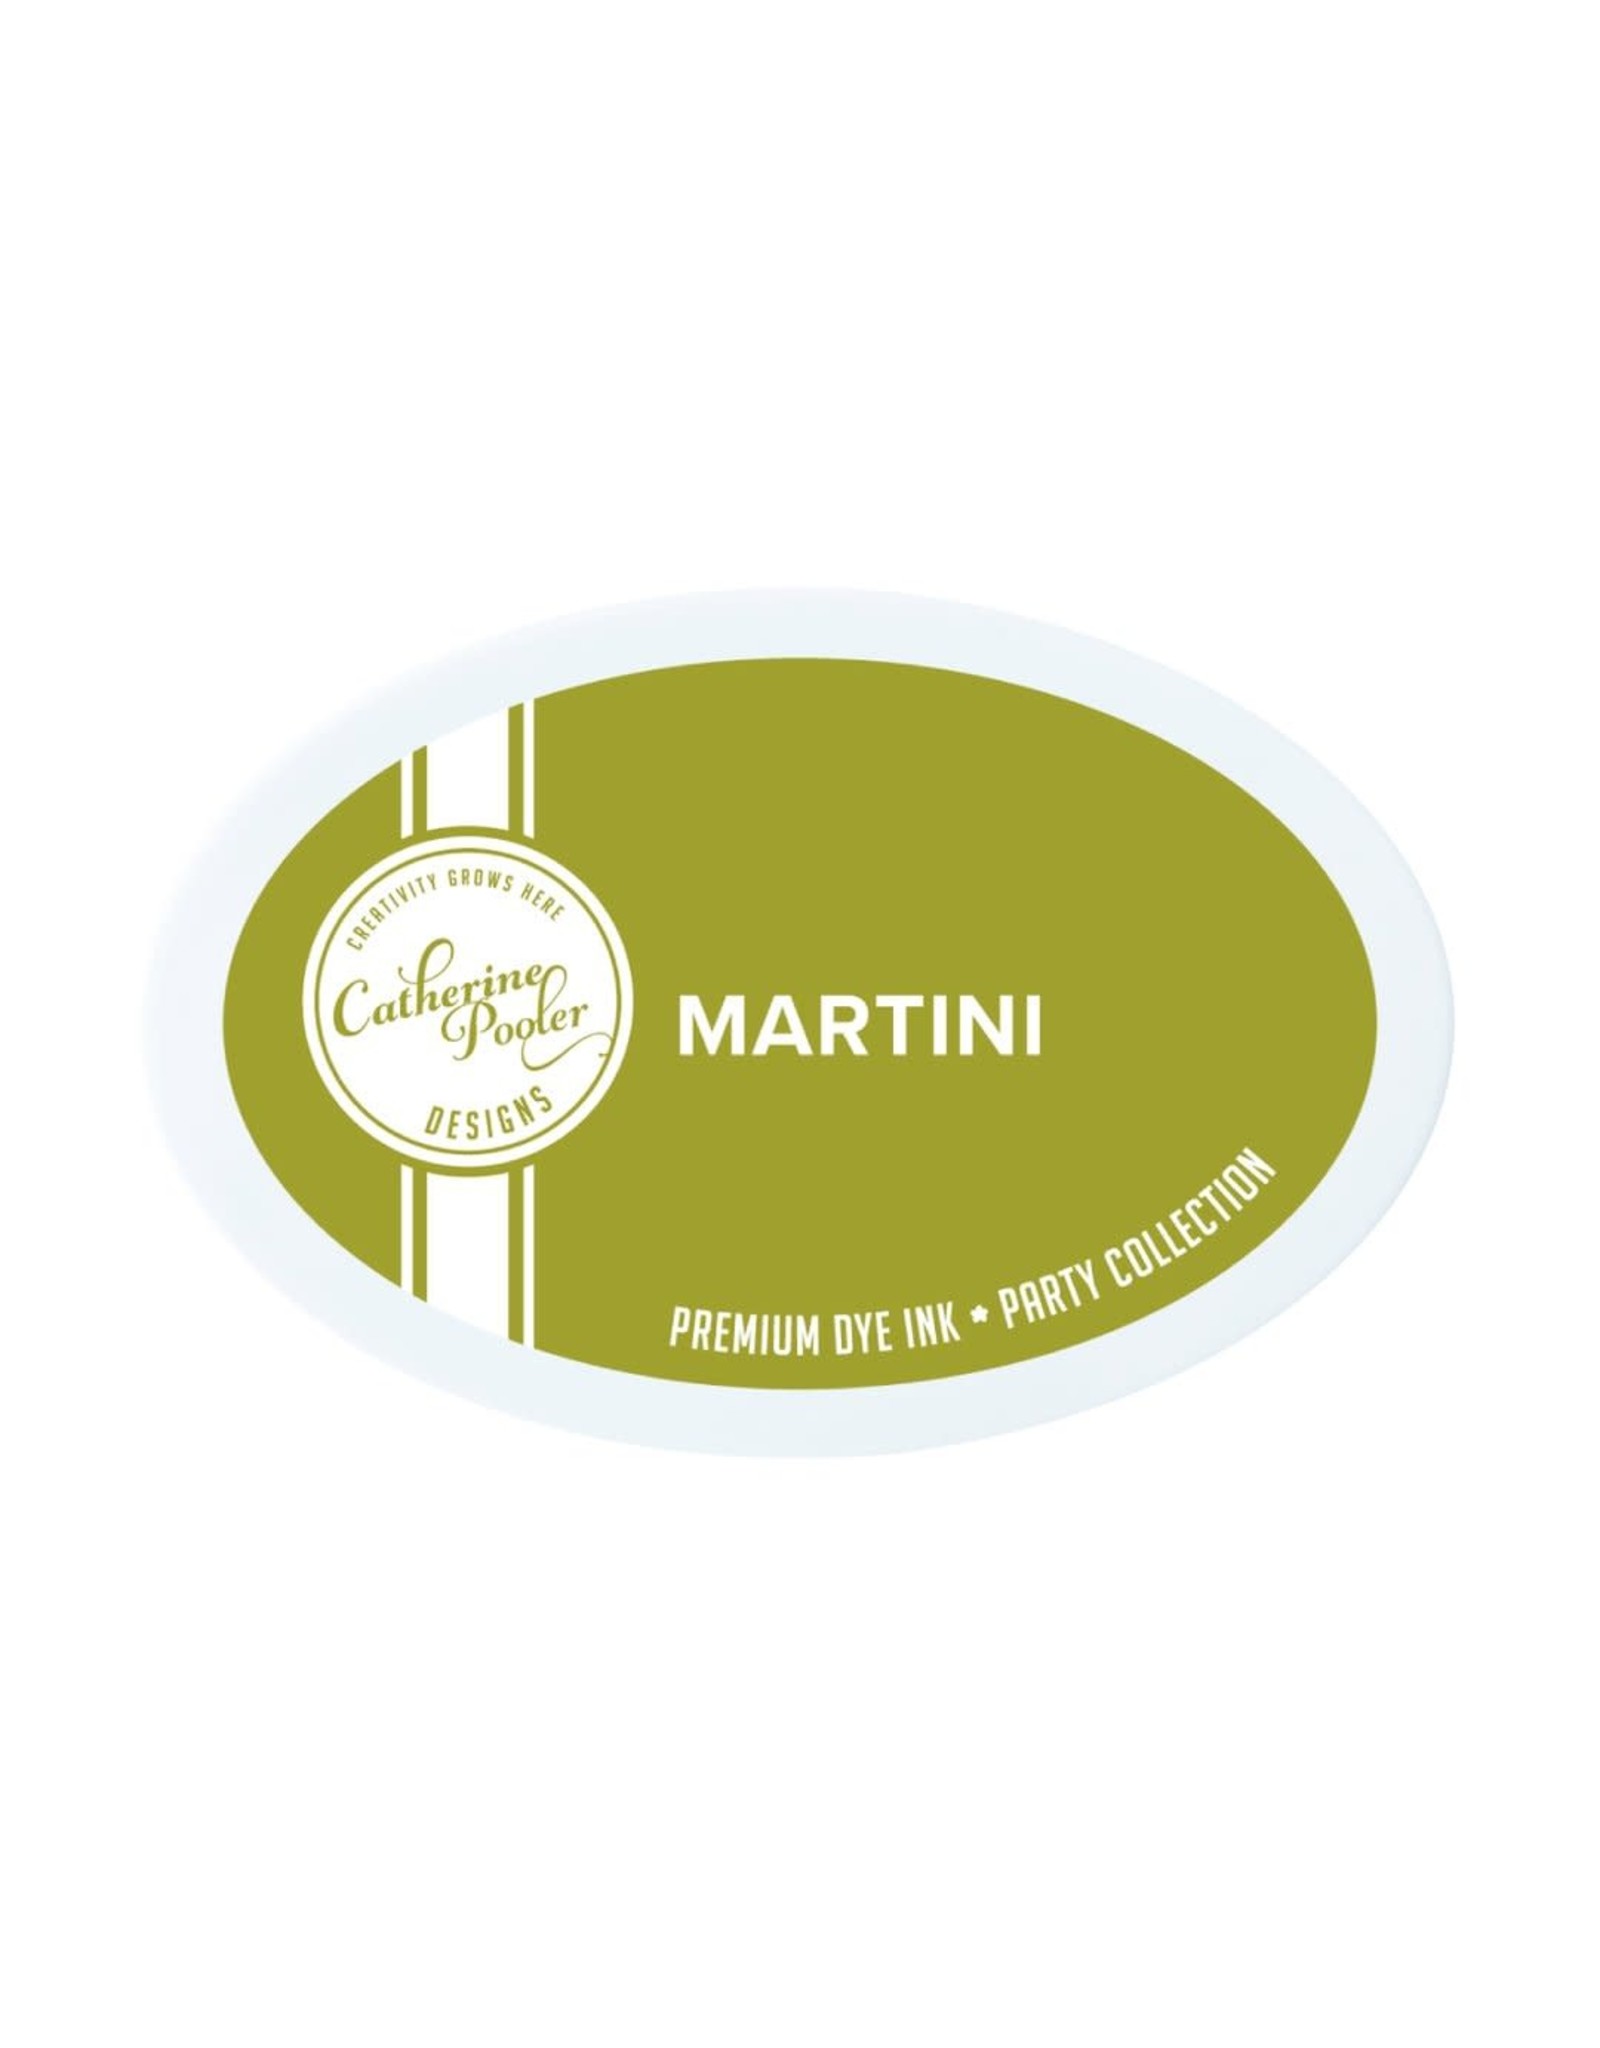 Catherine Pooler Designs Martini Ink Pad